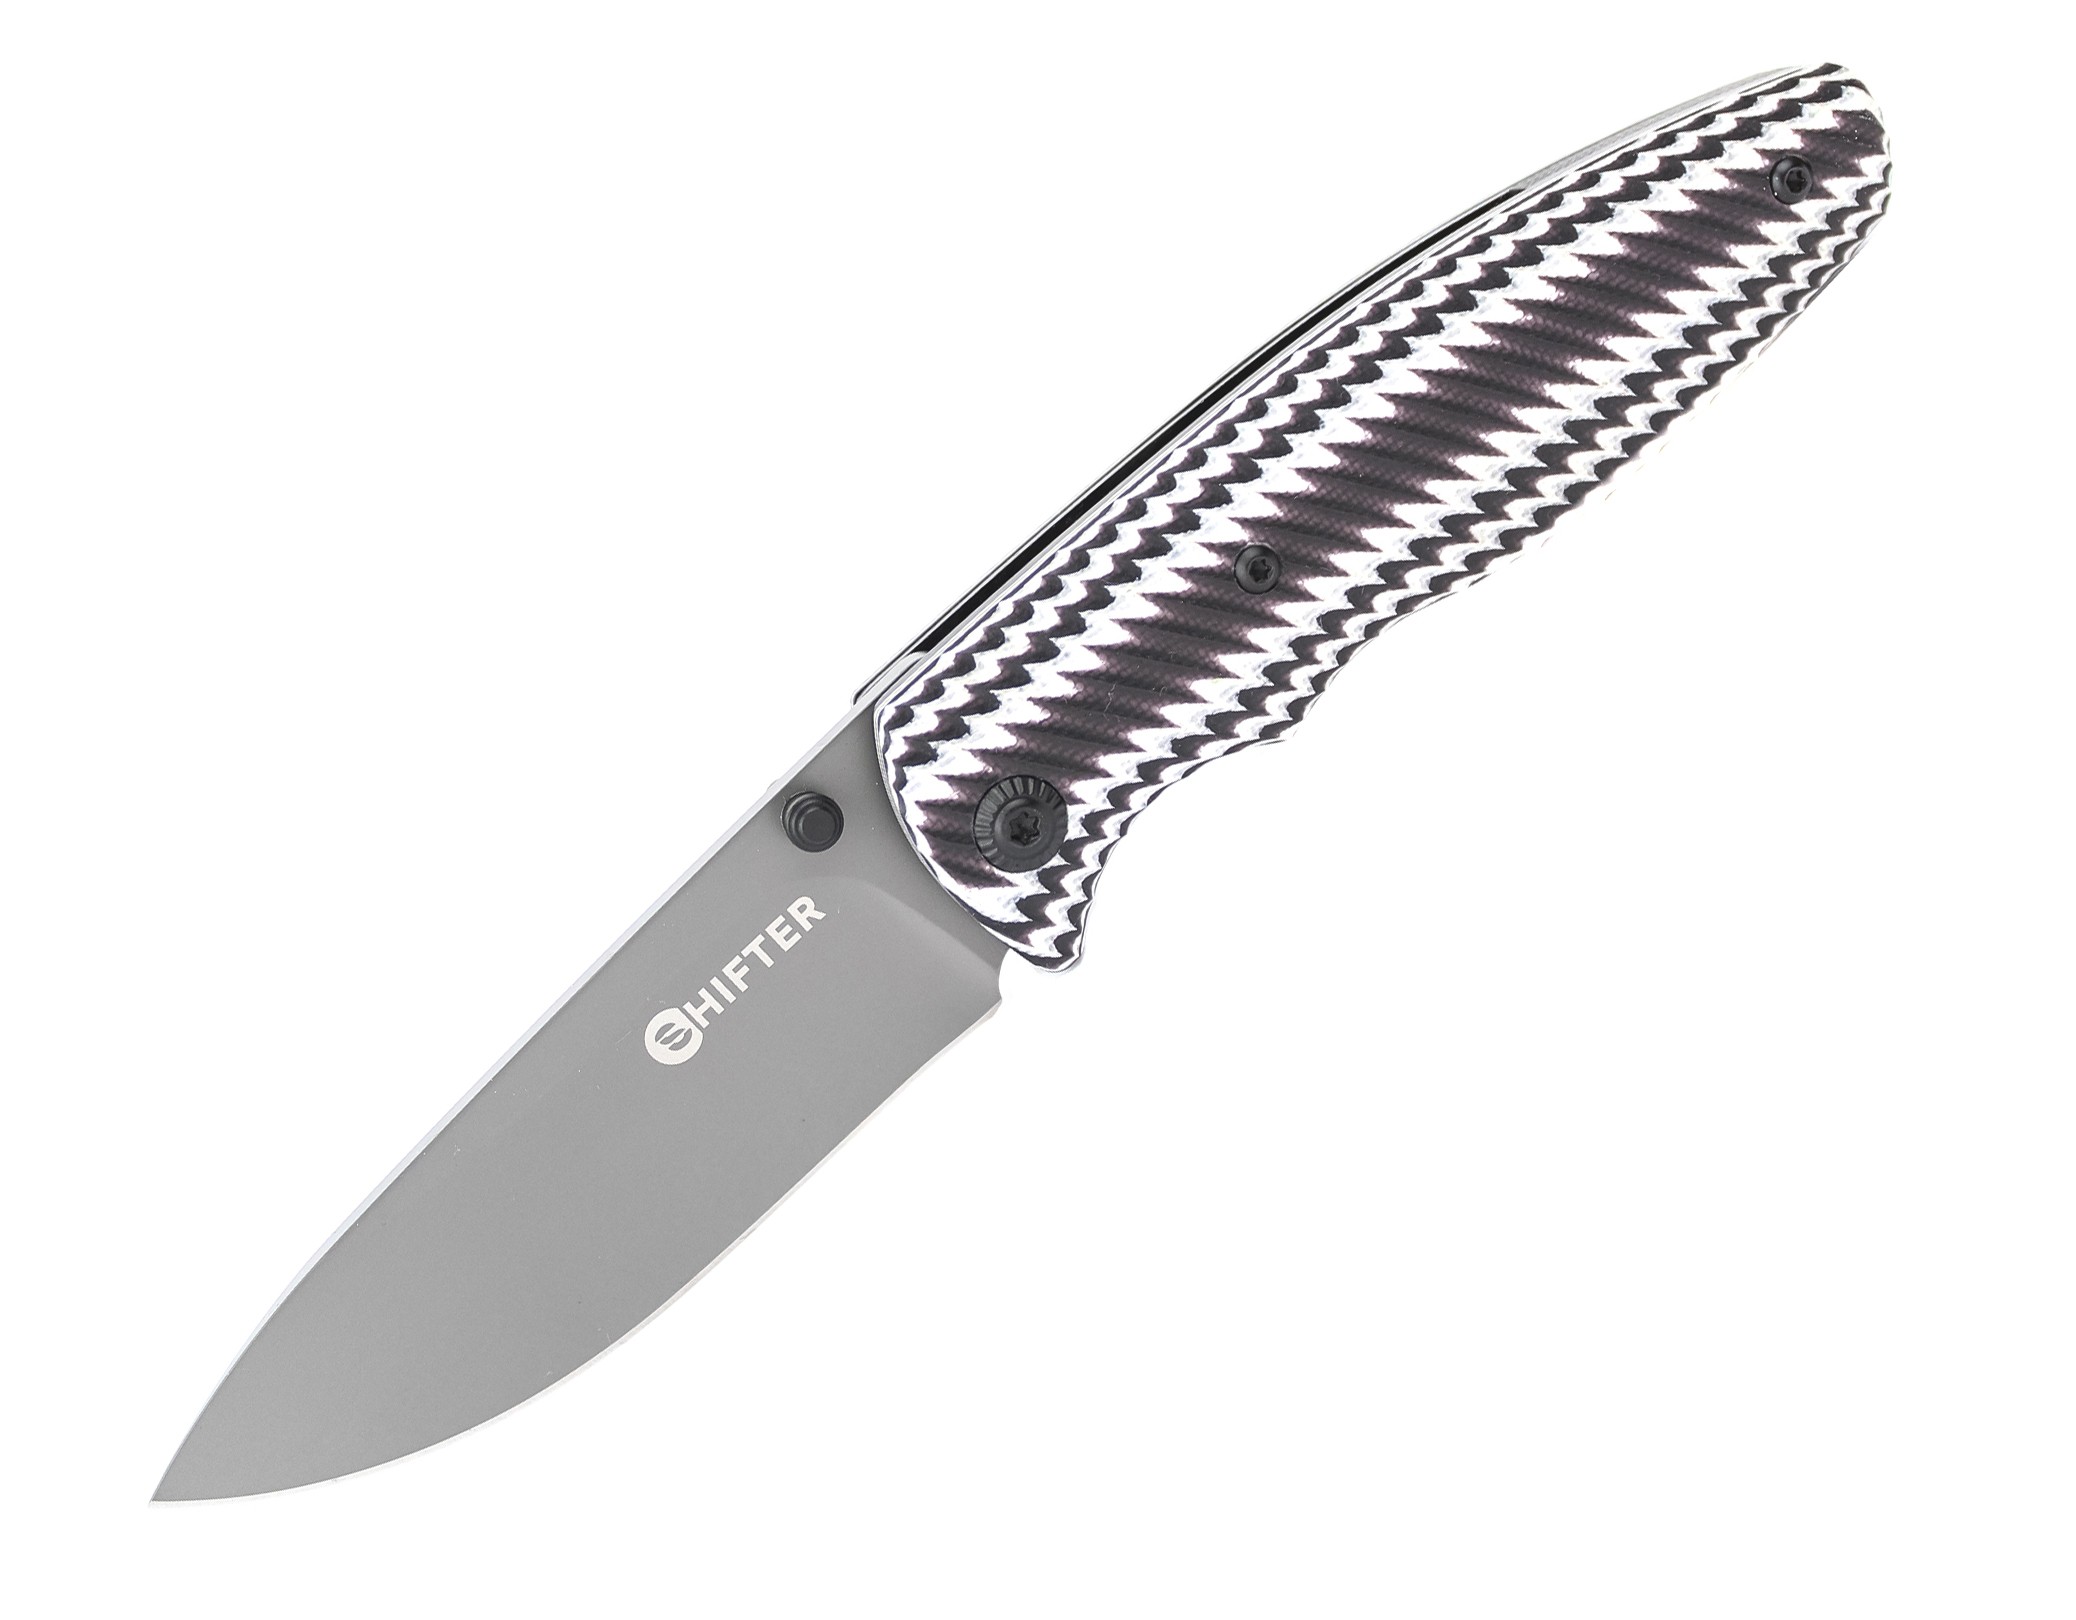 Нож Mr.Blade Zipper складной - фото 1